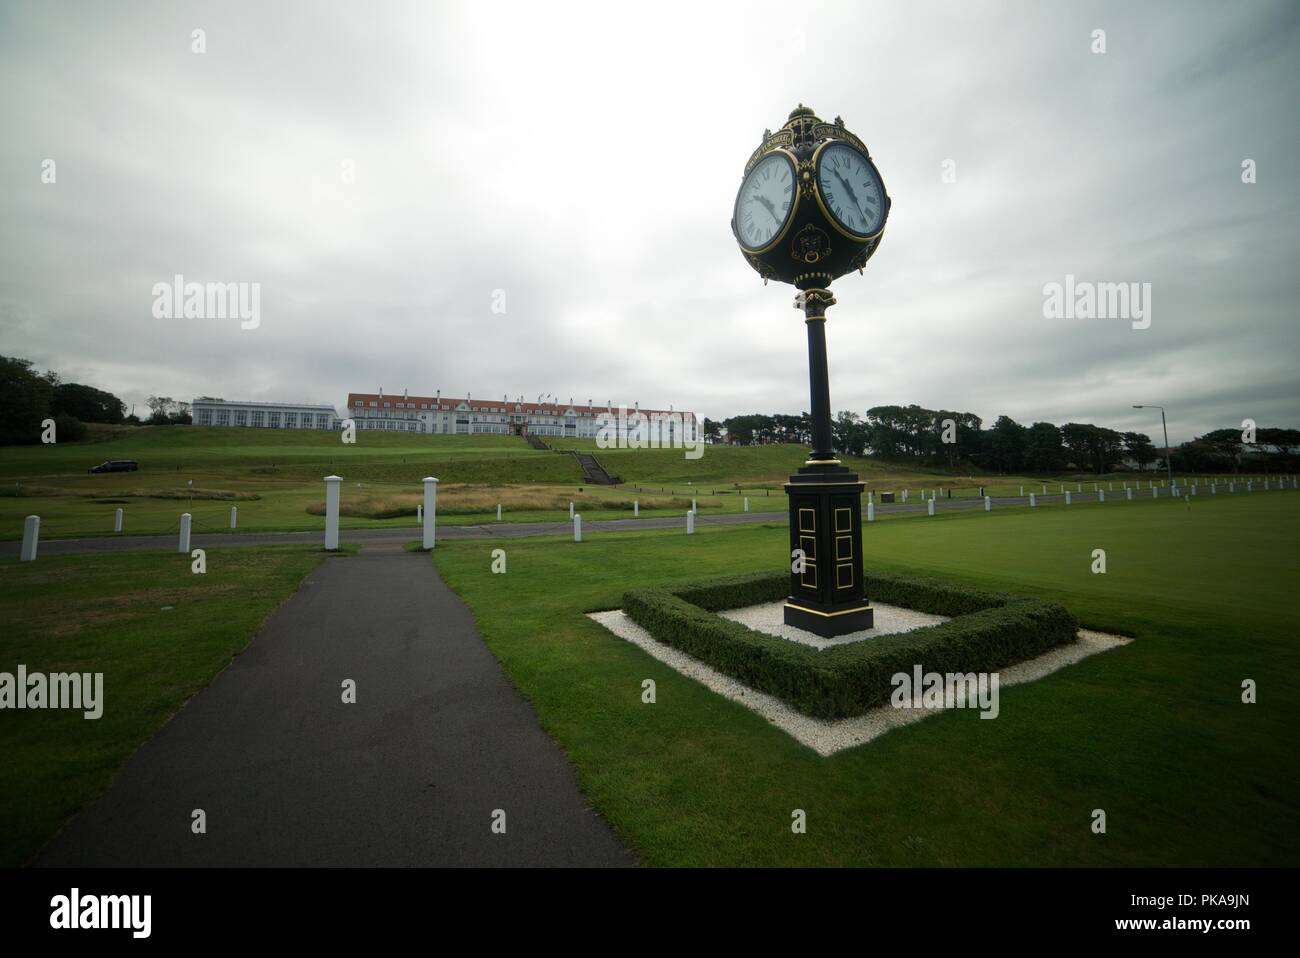 Ornate Trump Clock outside Trump Turnberry Golf Resort, Scotland Stock Photo